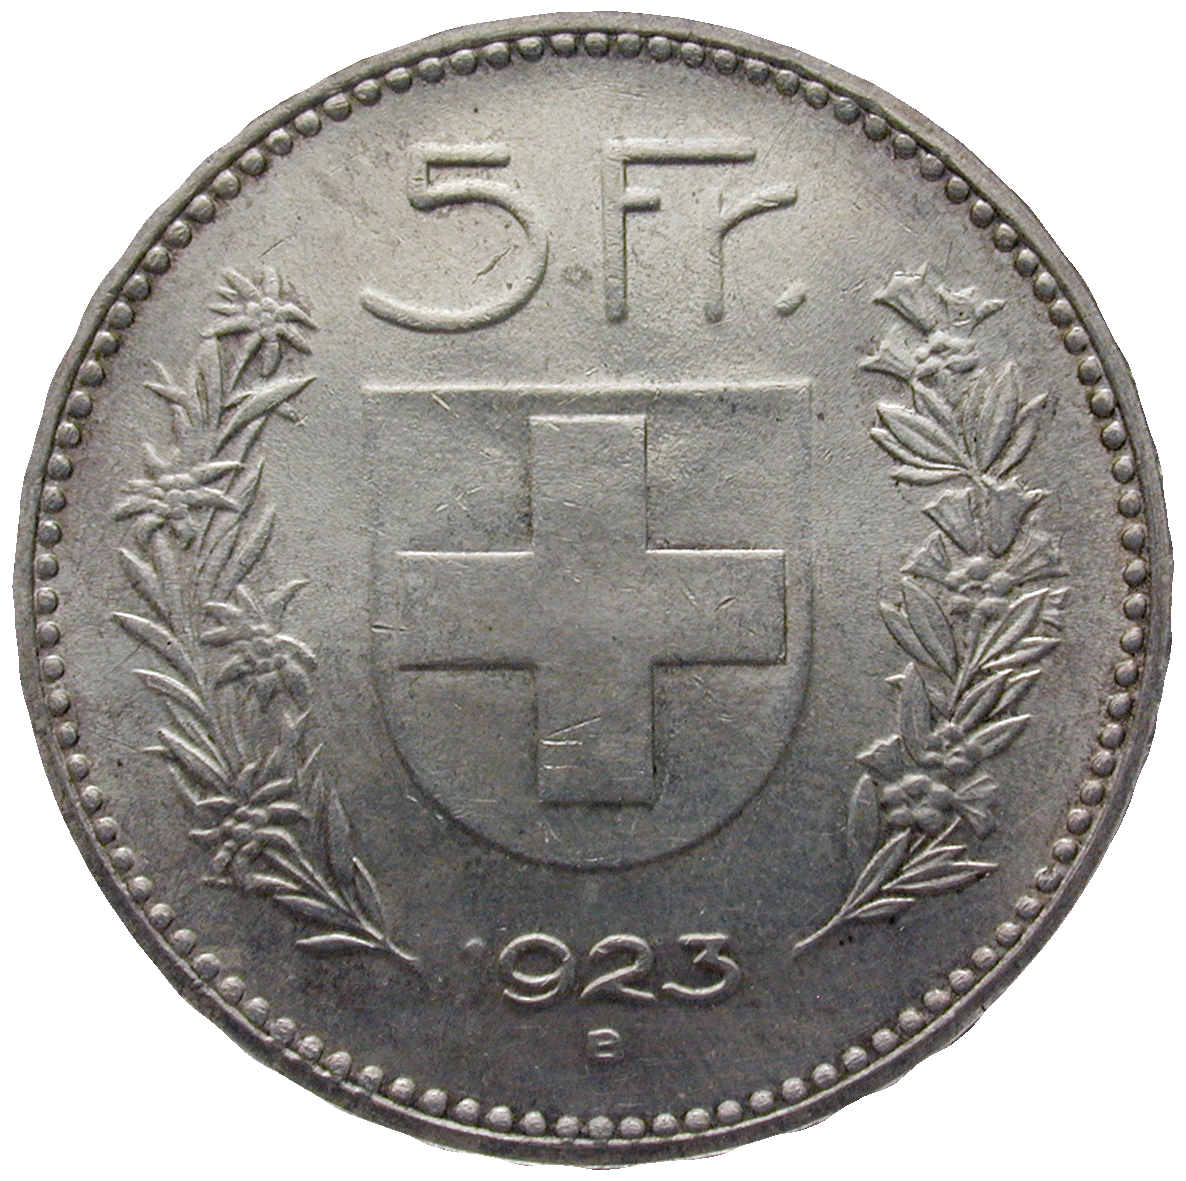 Swiss Confederation, 5 Francs 1923 (reverse)